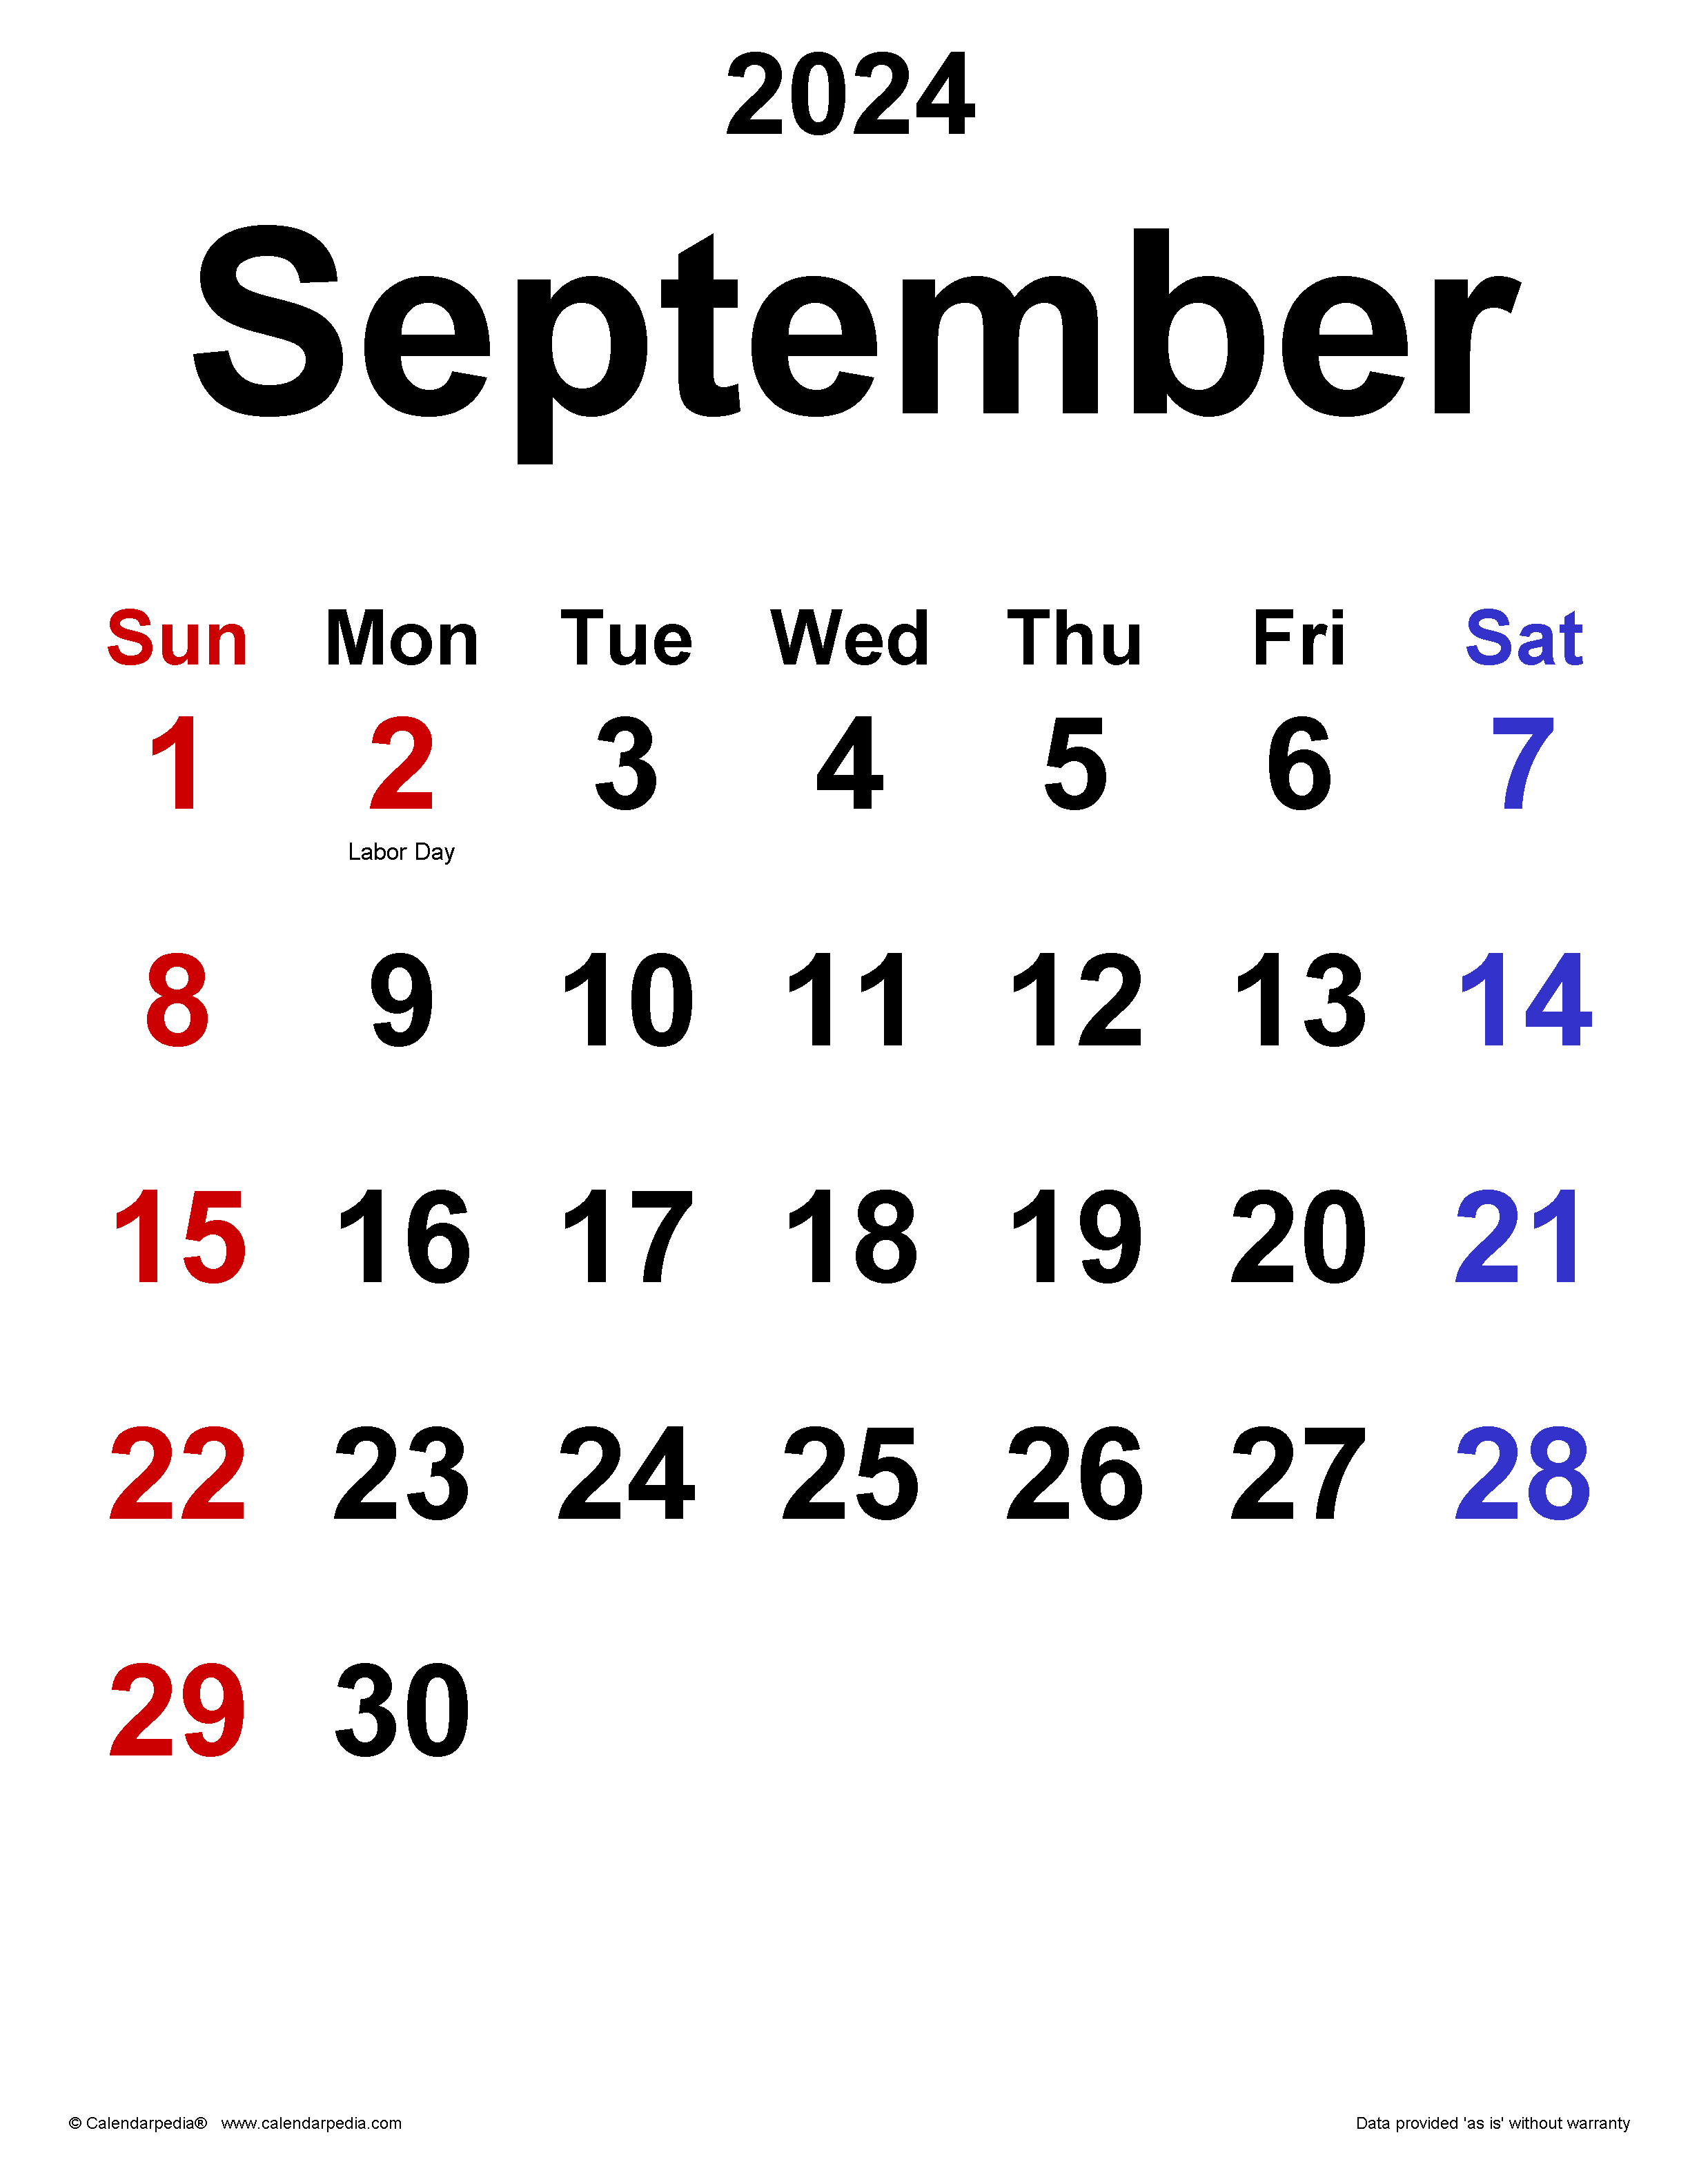 September 2024 Calender 2024 Calendar Printable